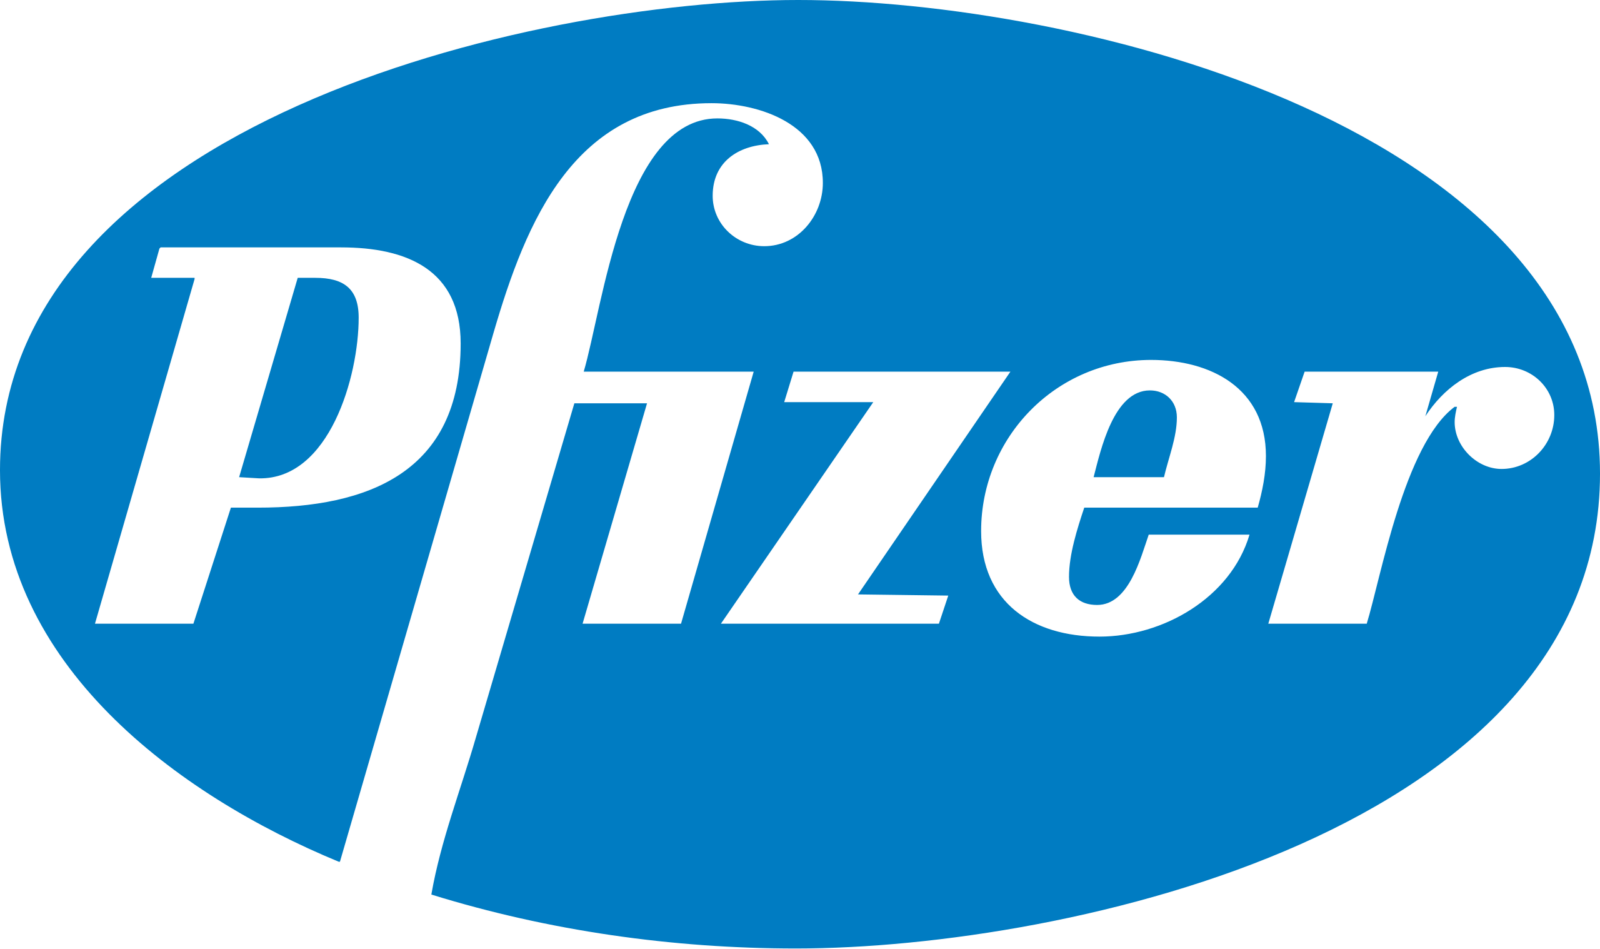  2023/04/Pfizer_logo.svg.png 